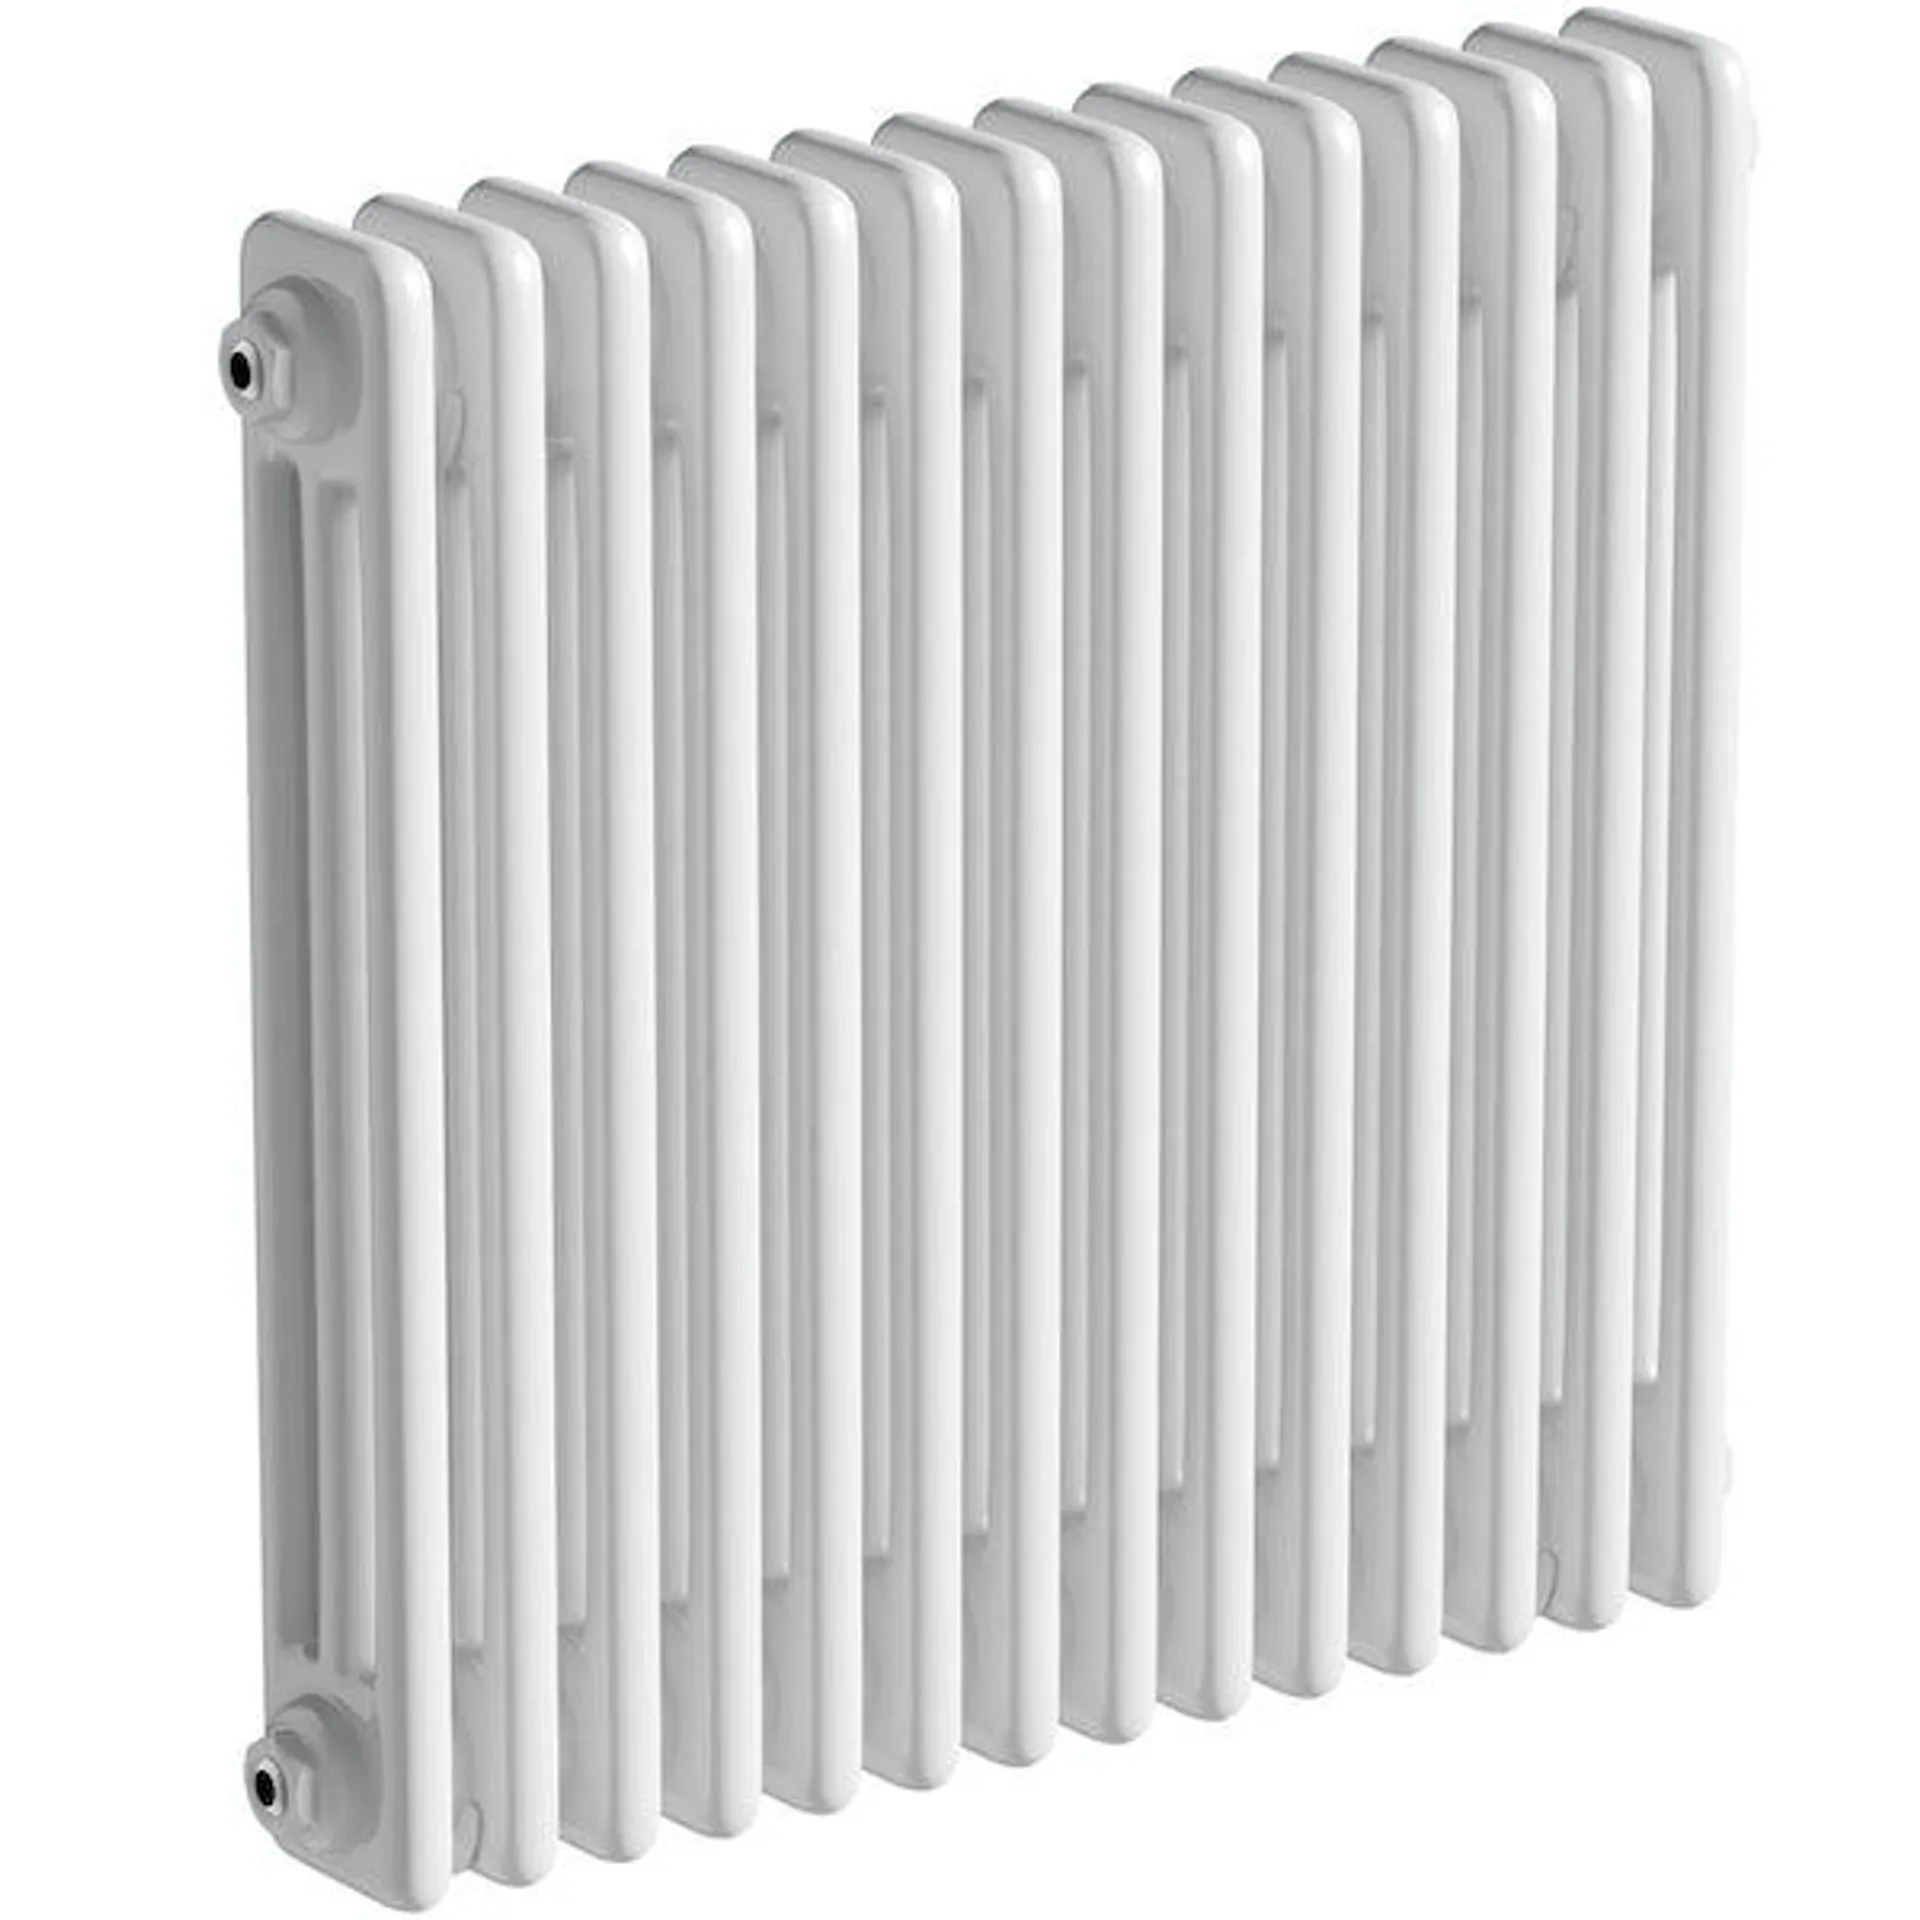 The Heating Co. Corso white 3 column radiator